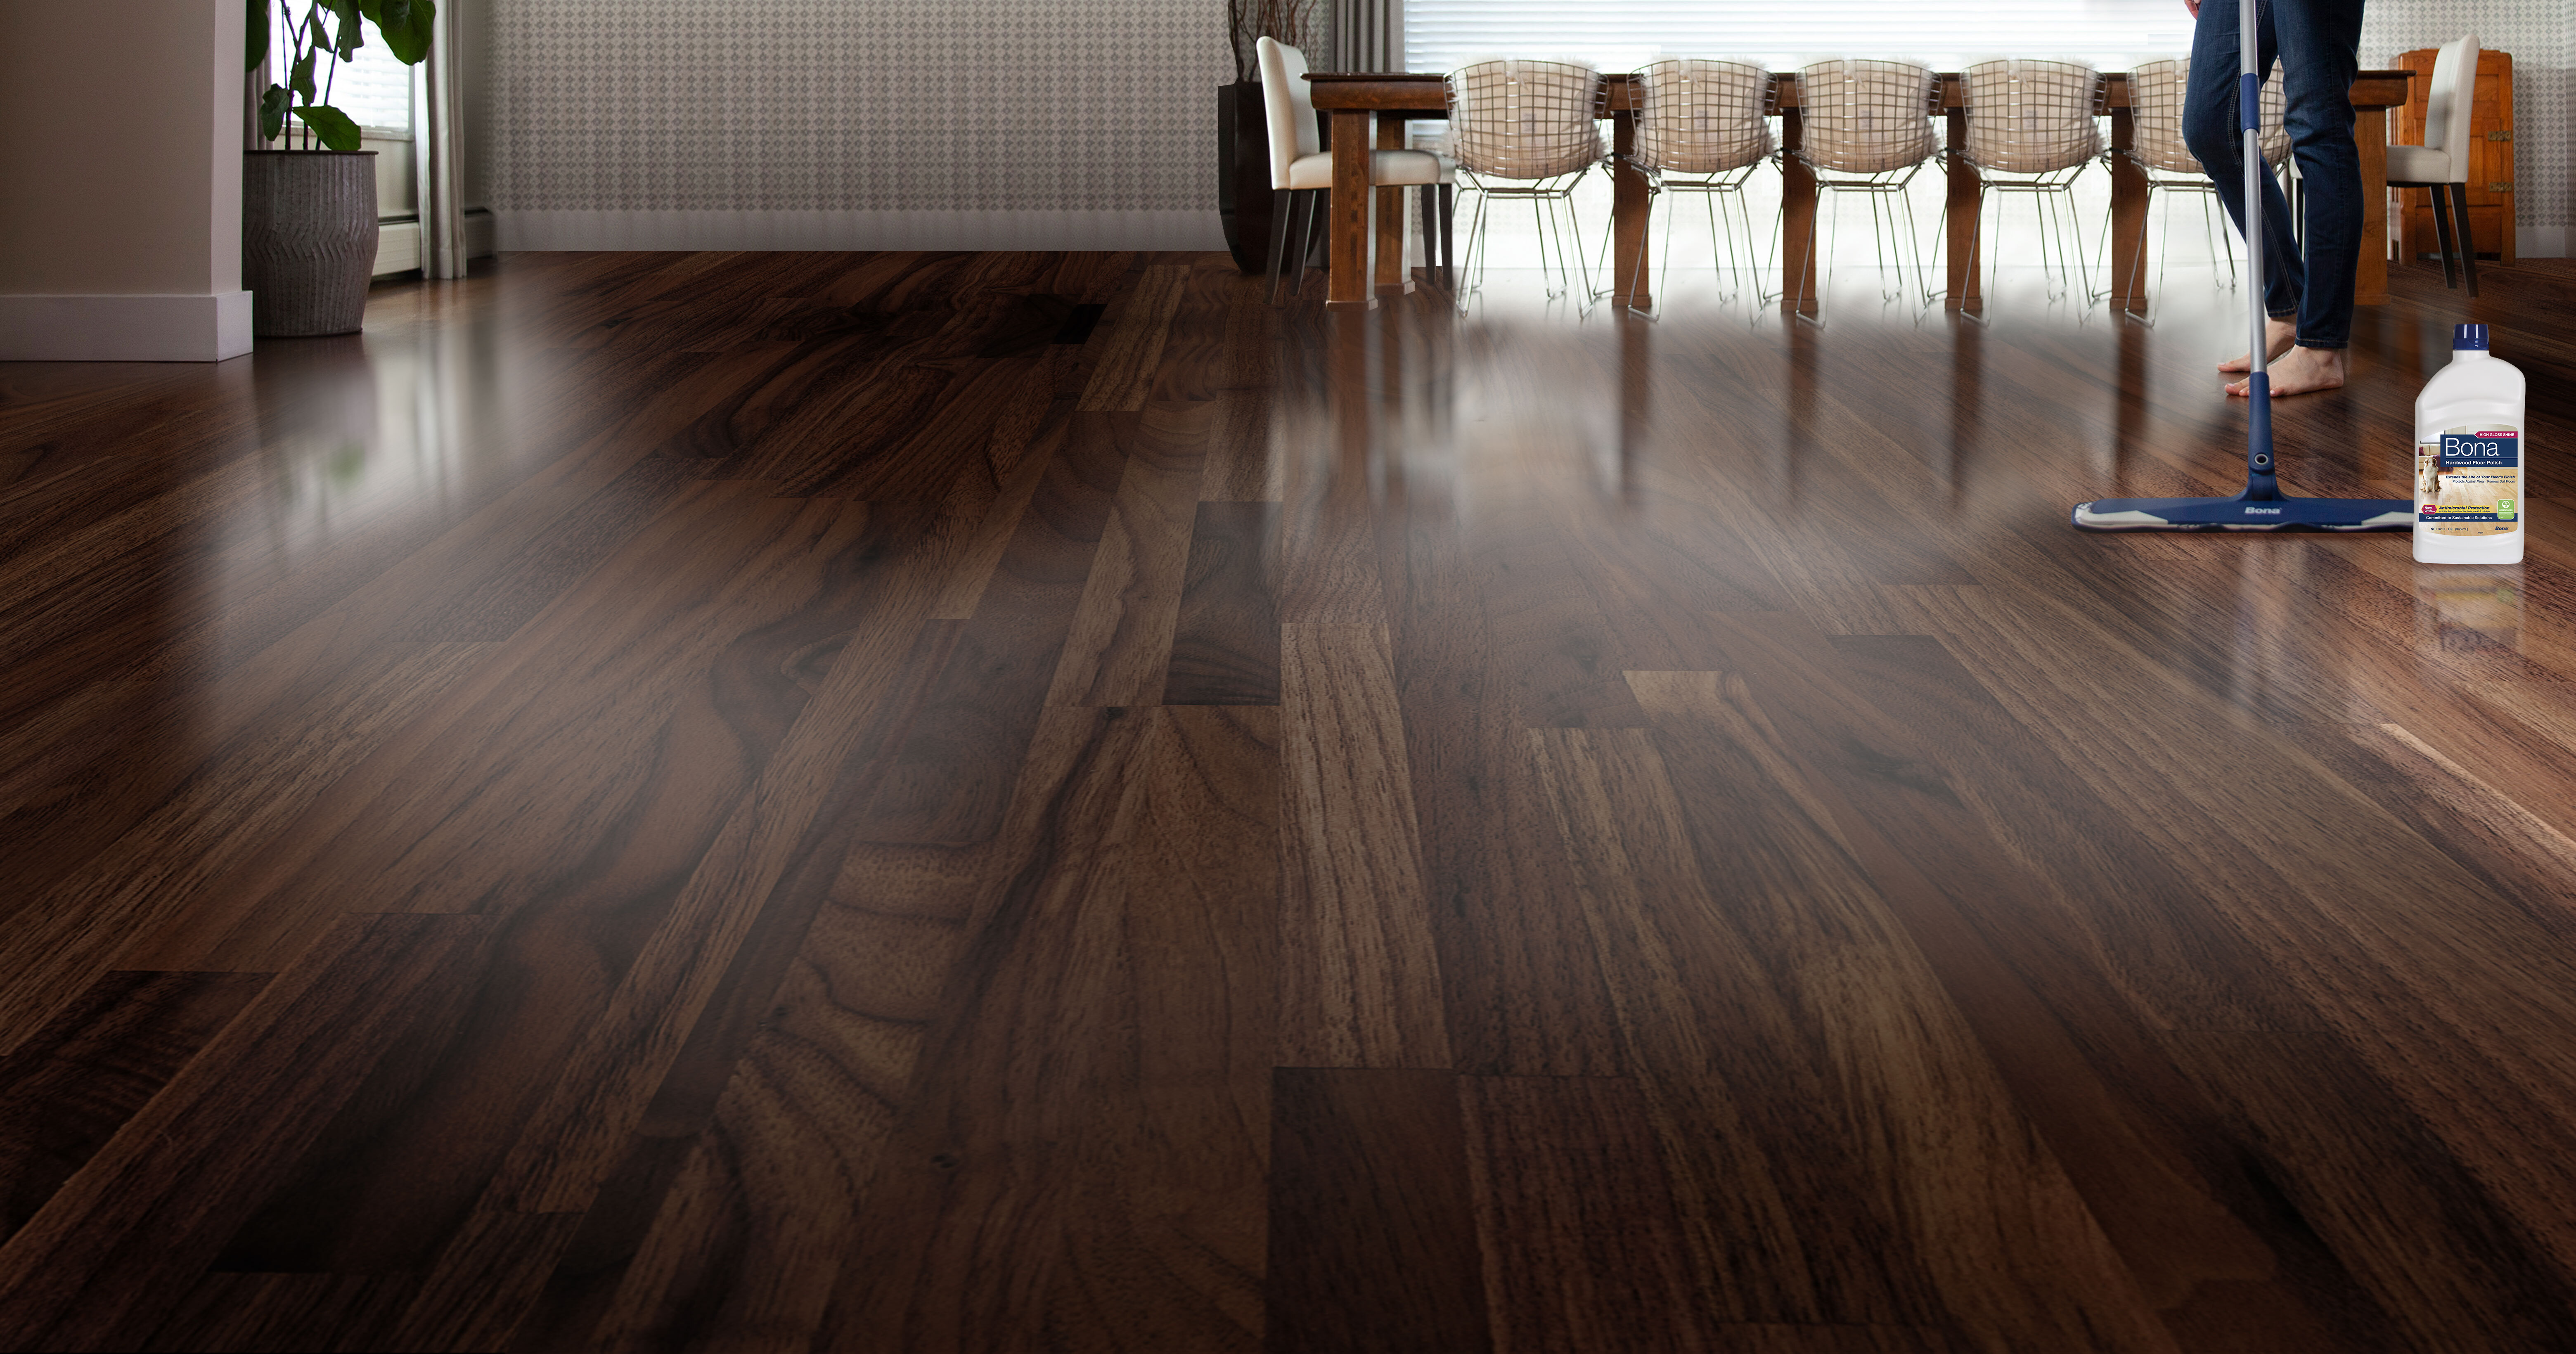 How To Polish Hardwood Floors Do S And, How Often To Use Bona On Hardwood Floors